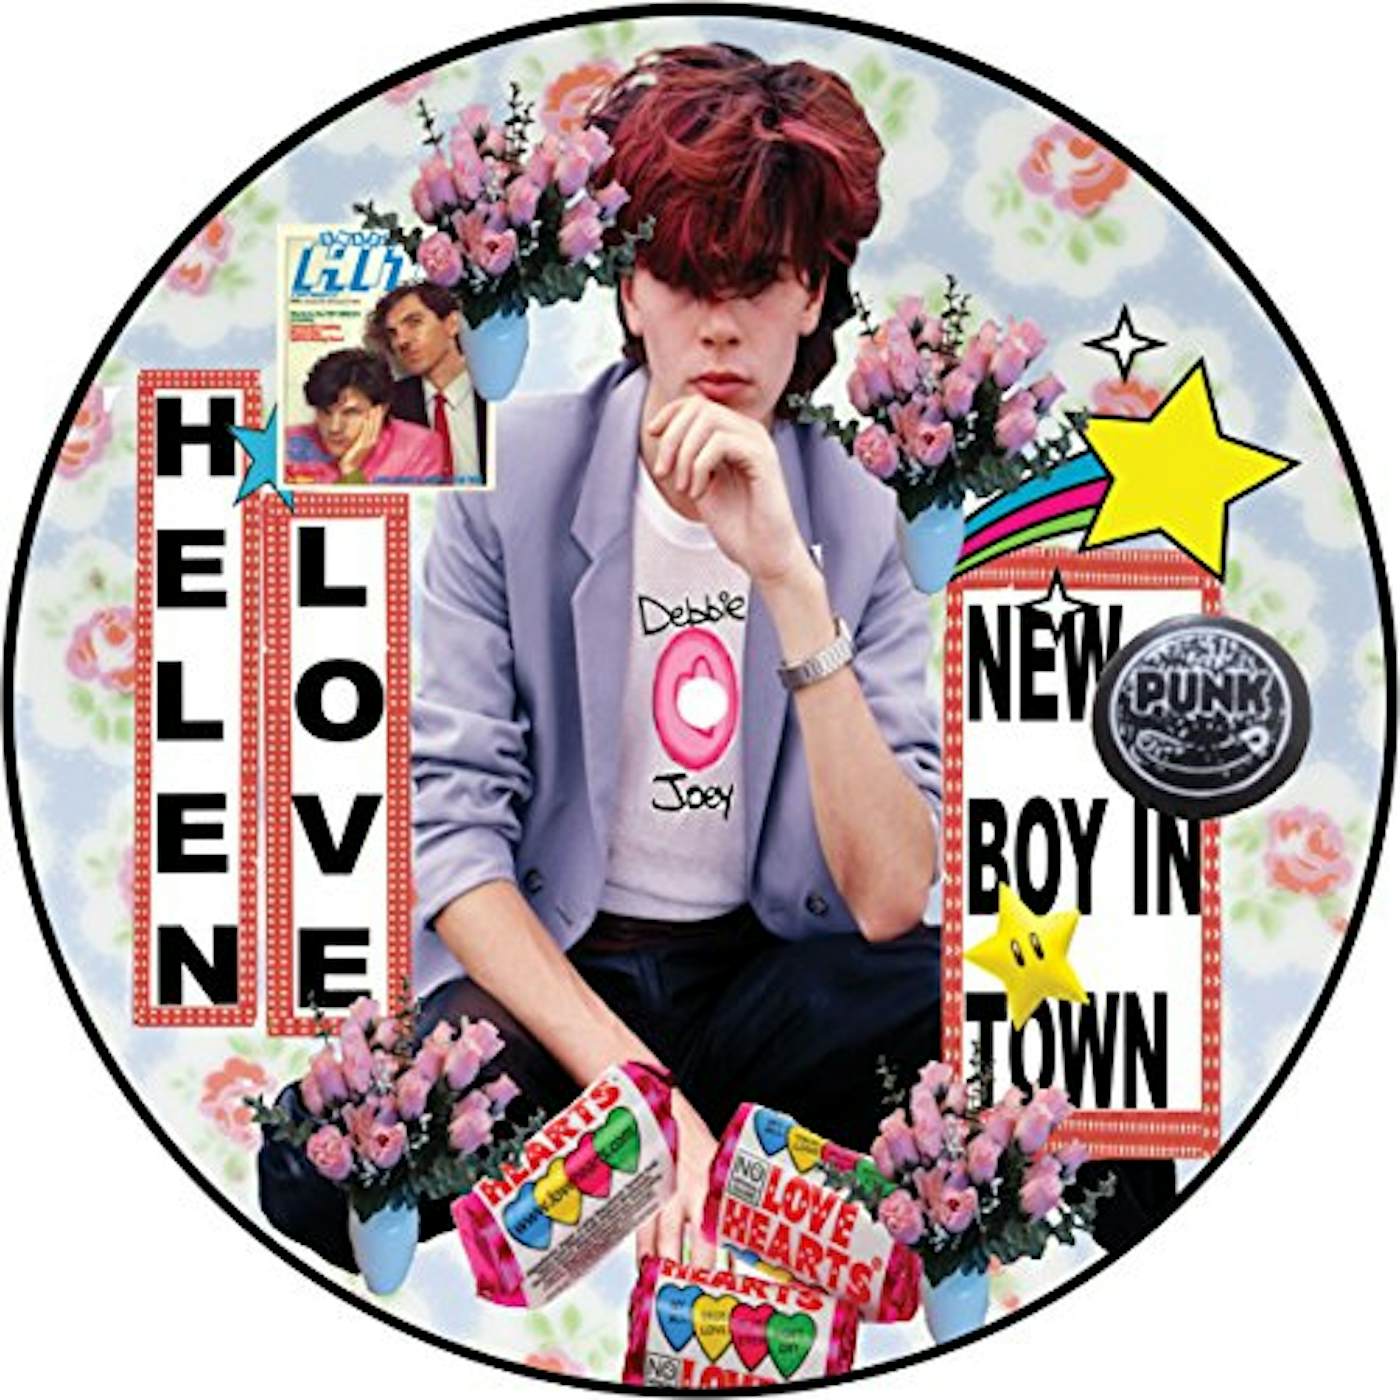 Helen Love New Boy In Town Vinyl Record